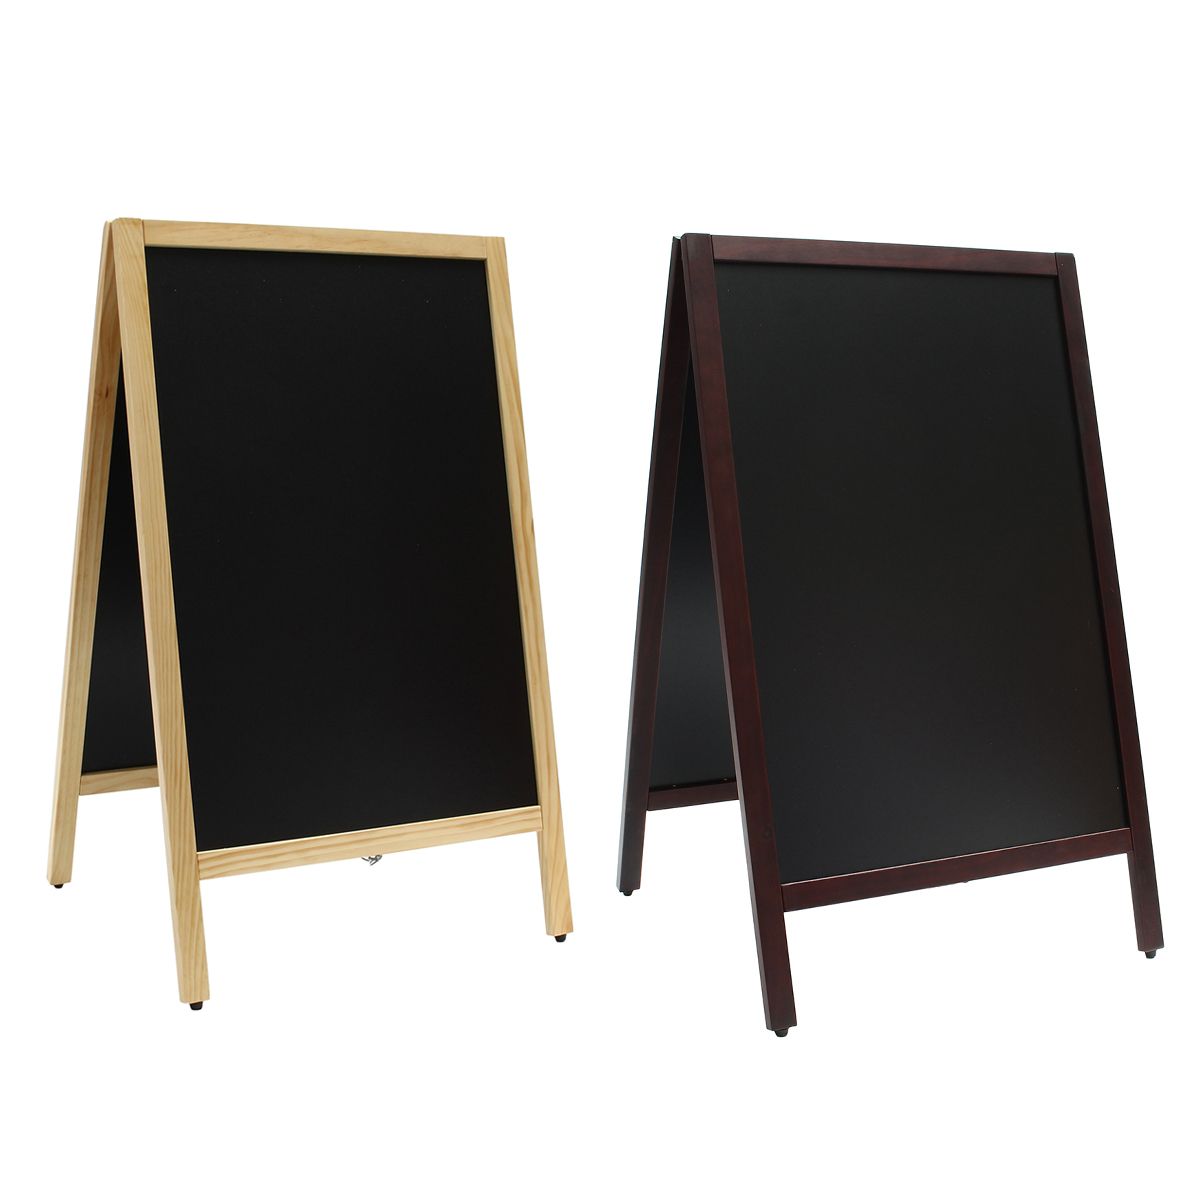 24x39-Inch-Double-sided-Foldable-Pinewood-Frame-Chalkboard-Wedding-Shop-Sign-Memo-Message-Menu-Board-1267623